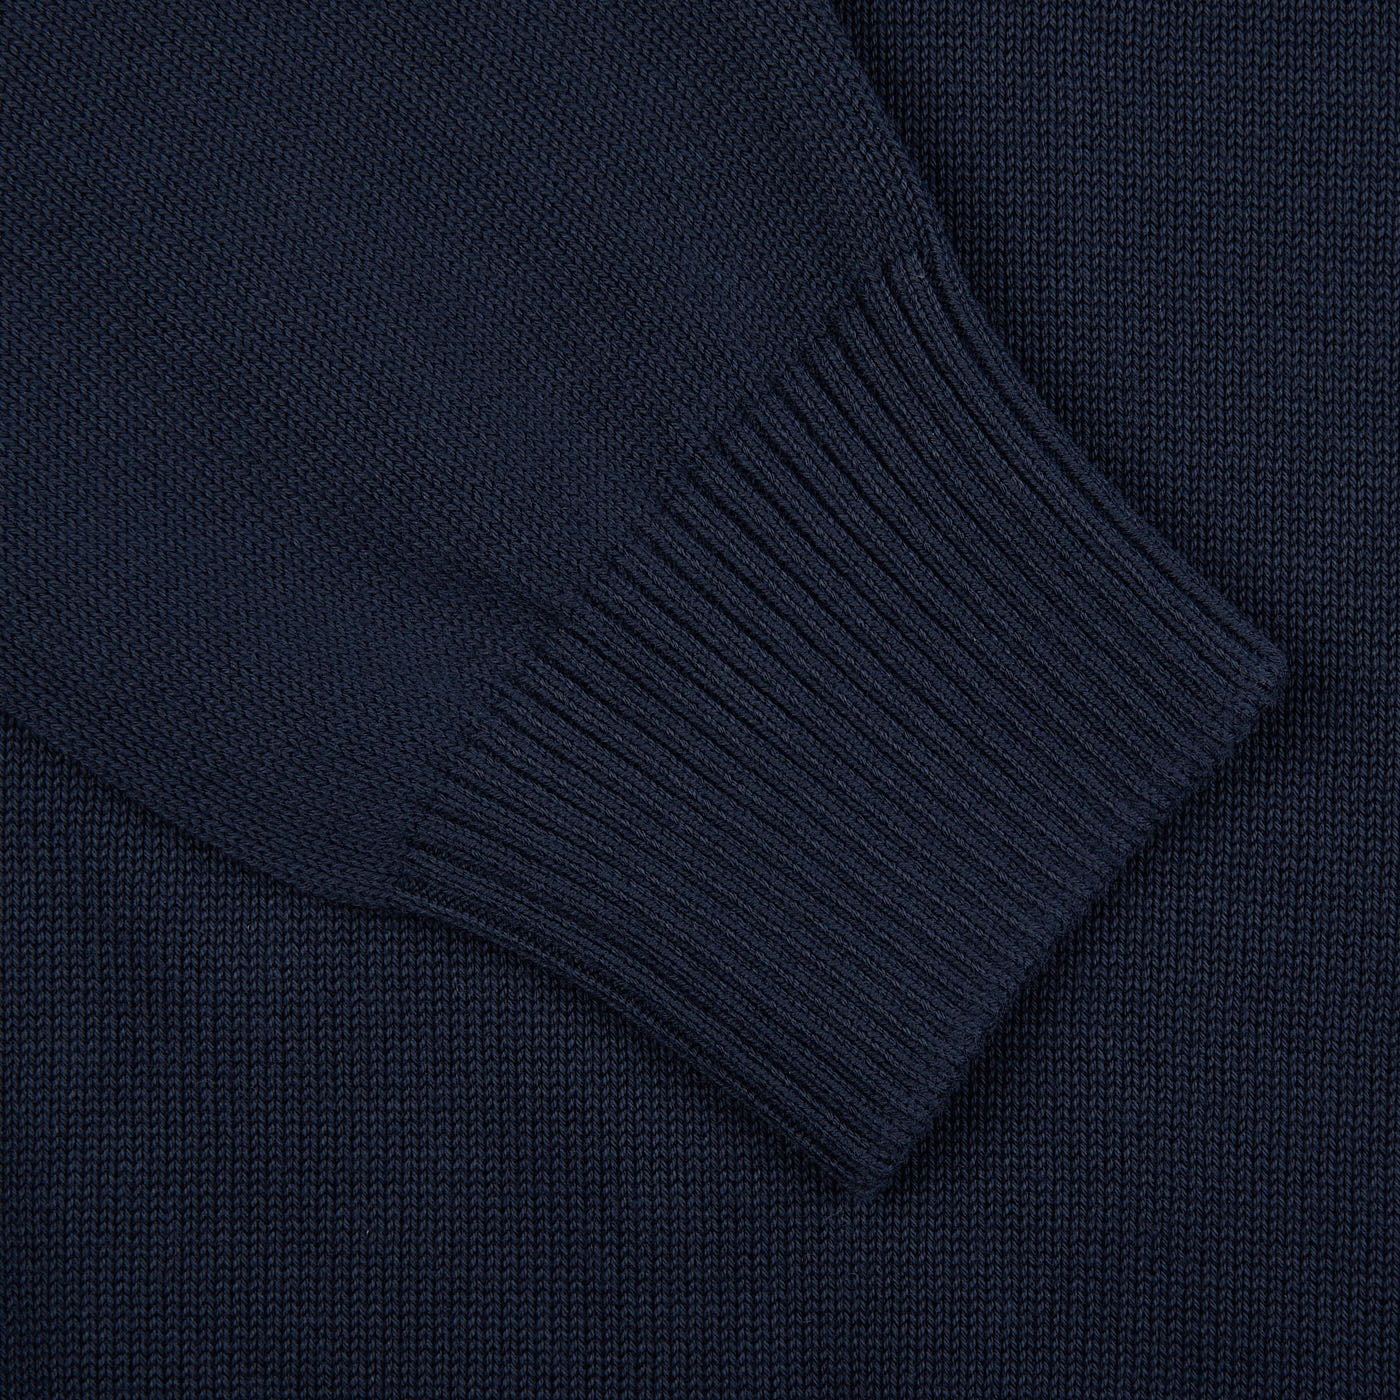 A close up image of a Gran Sasso navy blue Egyptian Cotton crewneck sweater.